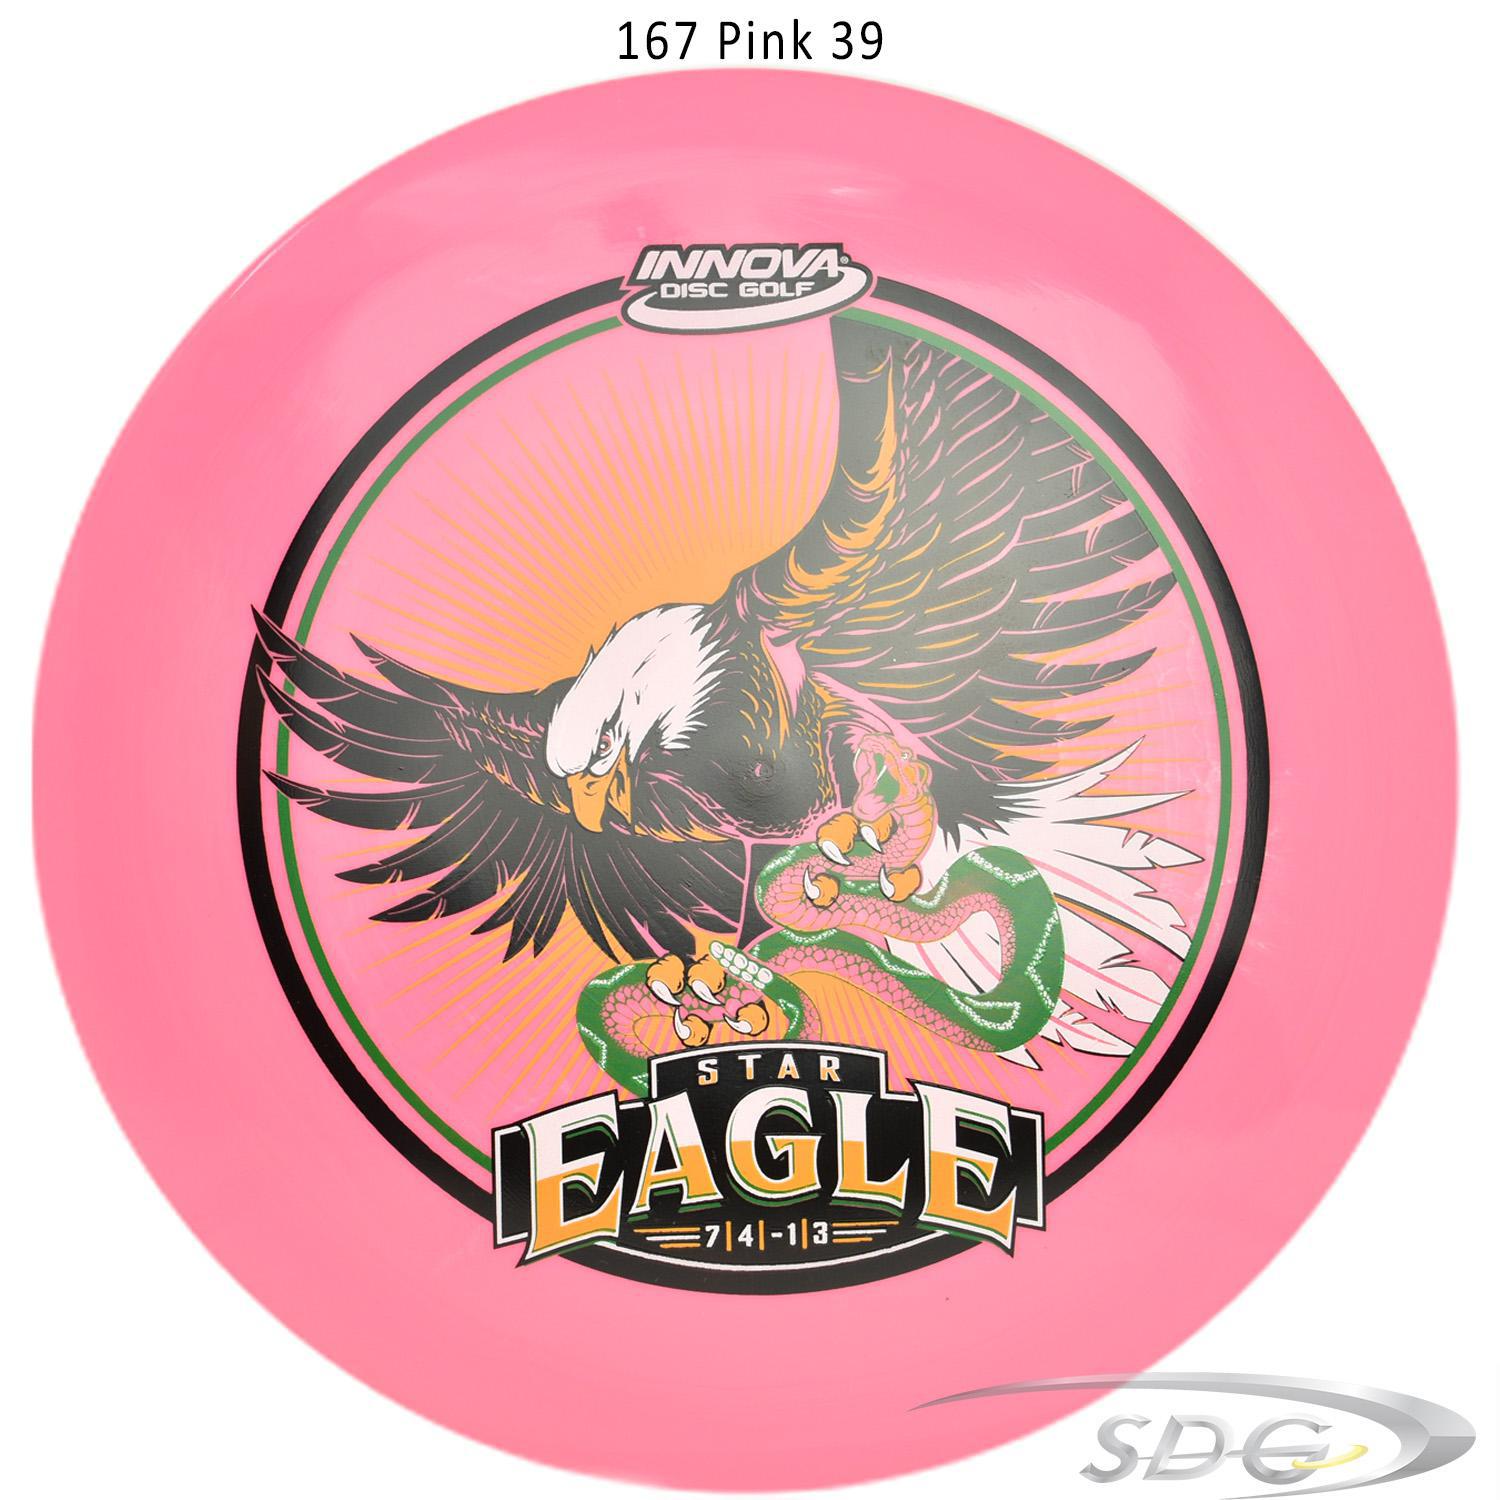 innova-star-eagle-disc-golf-fairway-driver 167 Pink 39 